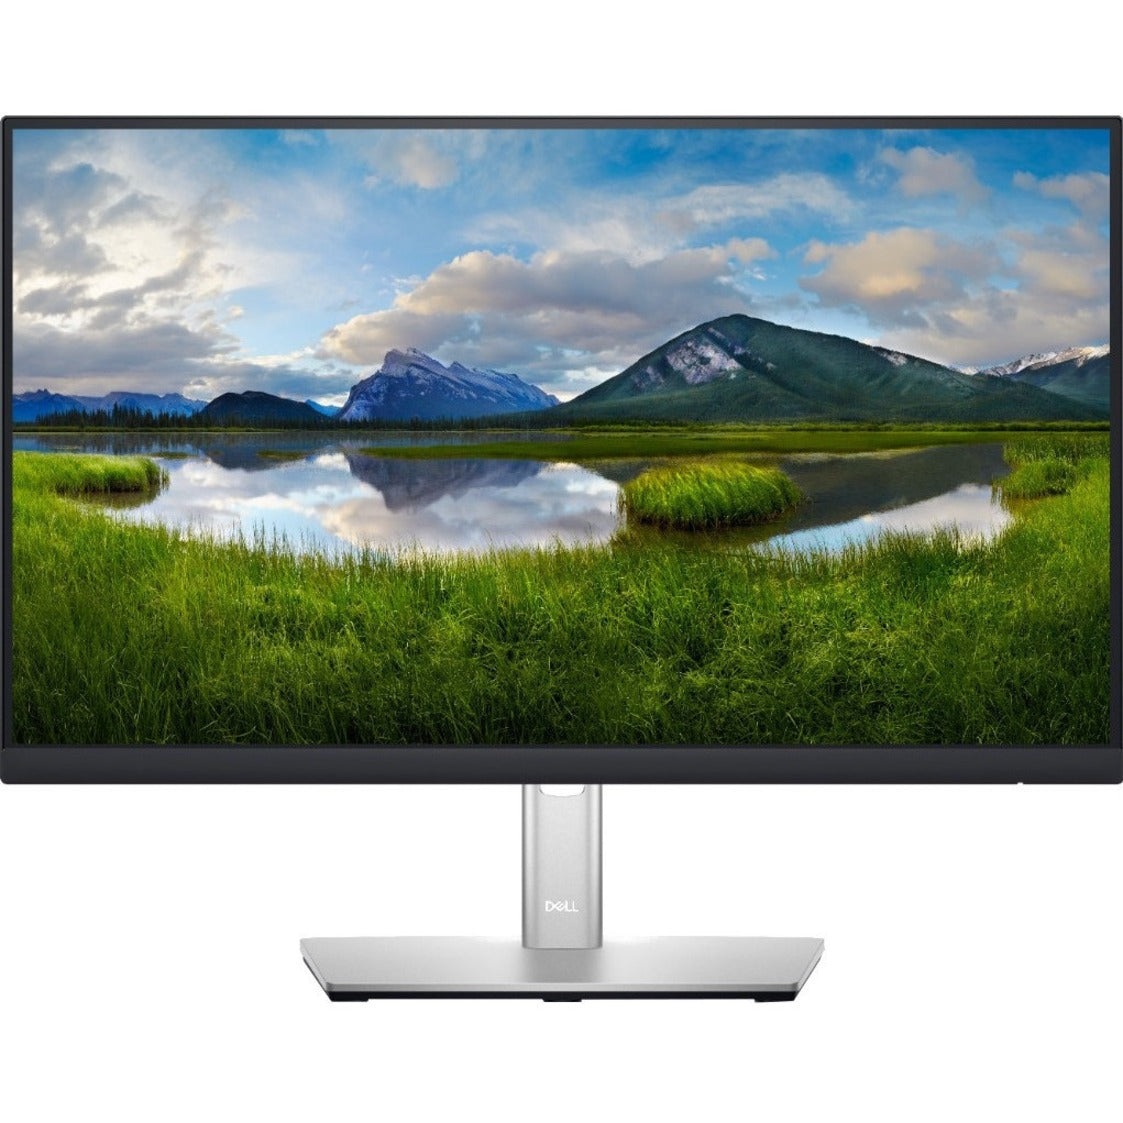 Dell P2222H 21.5" Full HD LCD Monitor - 16:9 - Black Silver